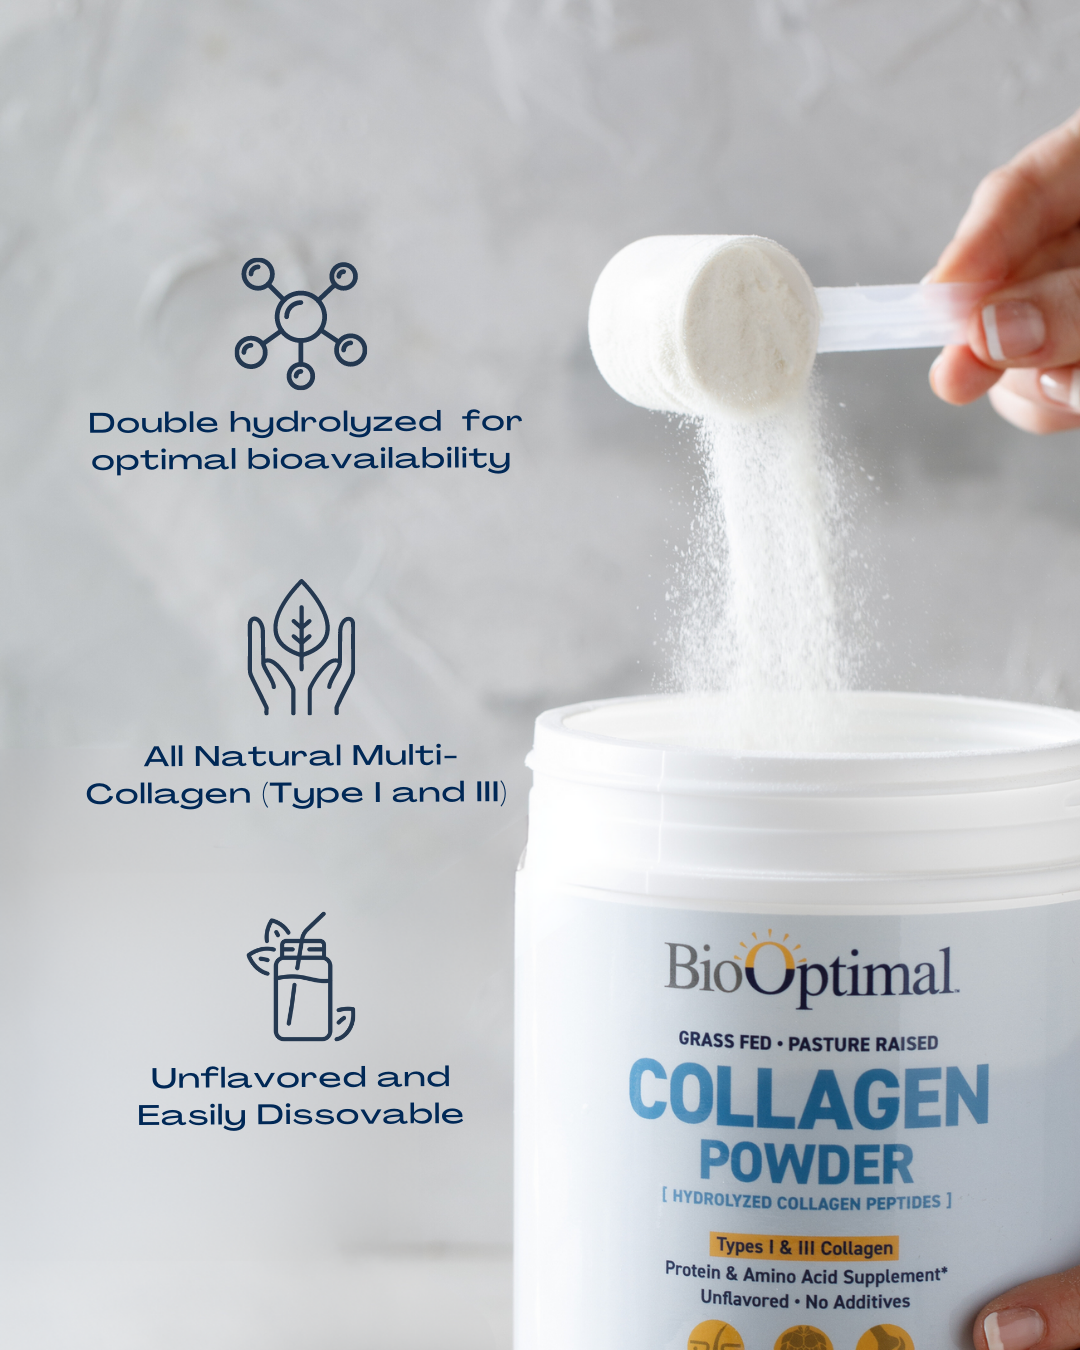 BioOptimal Collagen Powder (30 Serving) - Promotes Hair, Nail, Skin, Bone and Joint Health, Zero Sugar, Unflavored